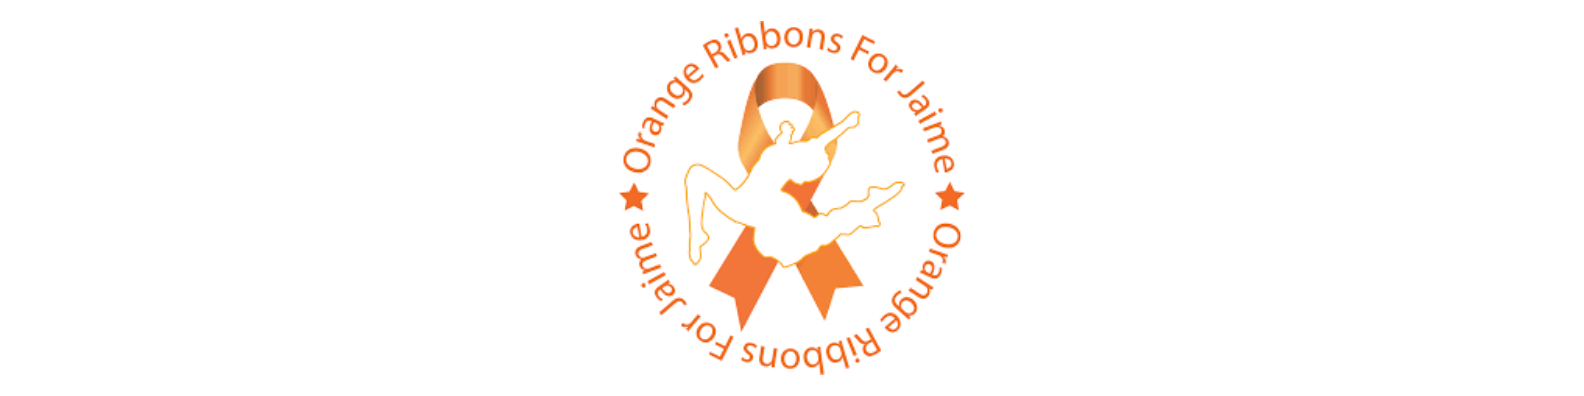 Orange Ribbons for Jaime